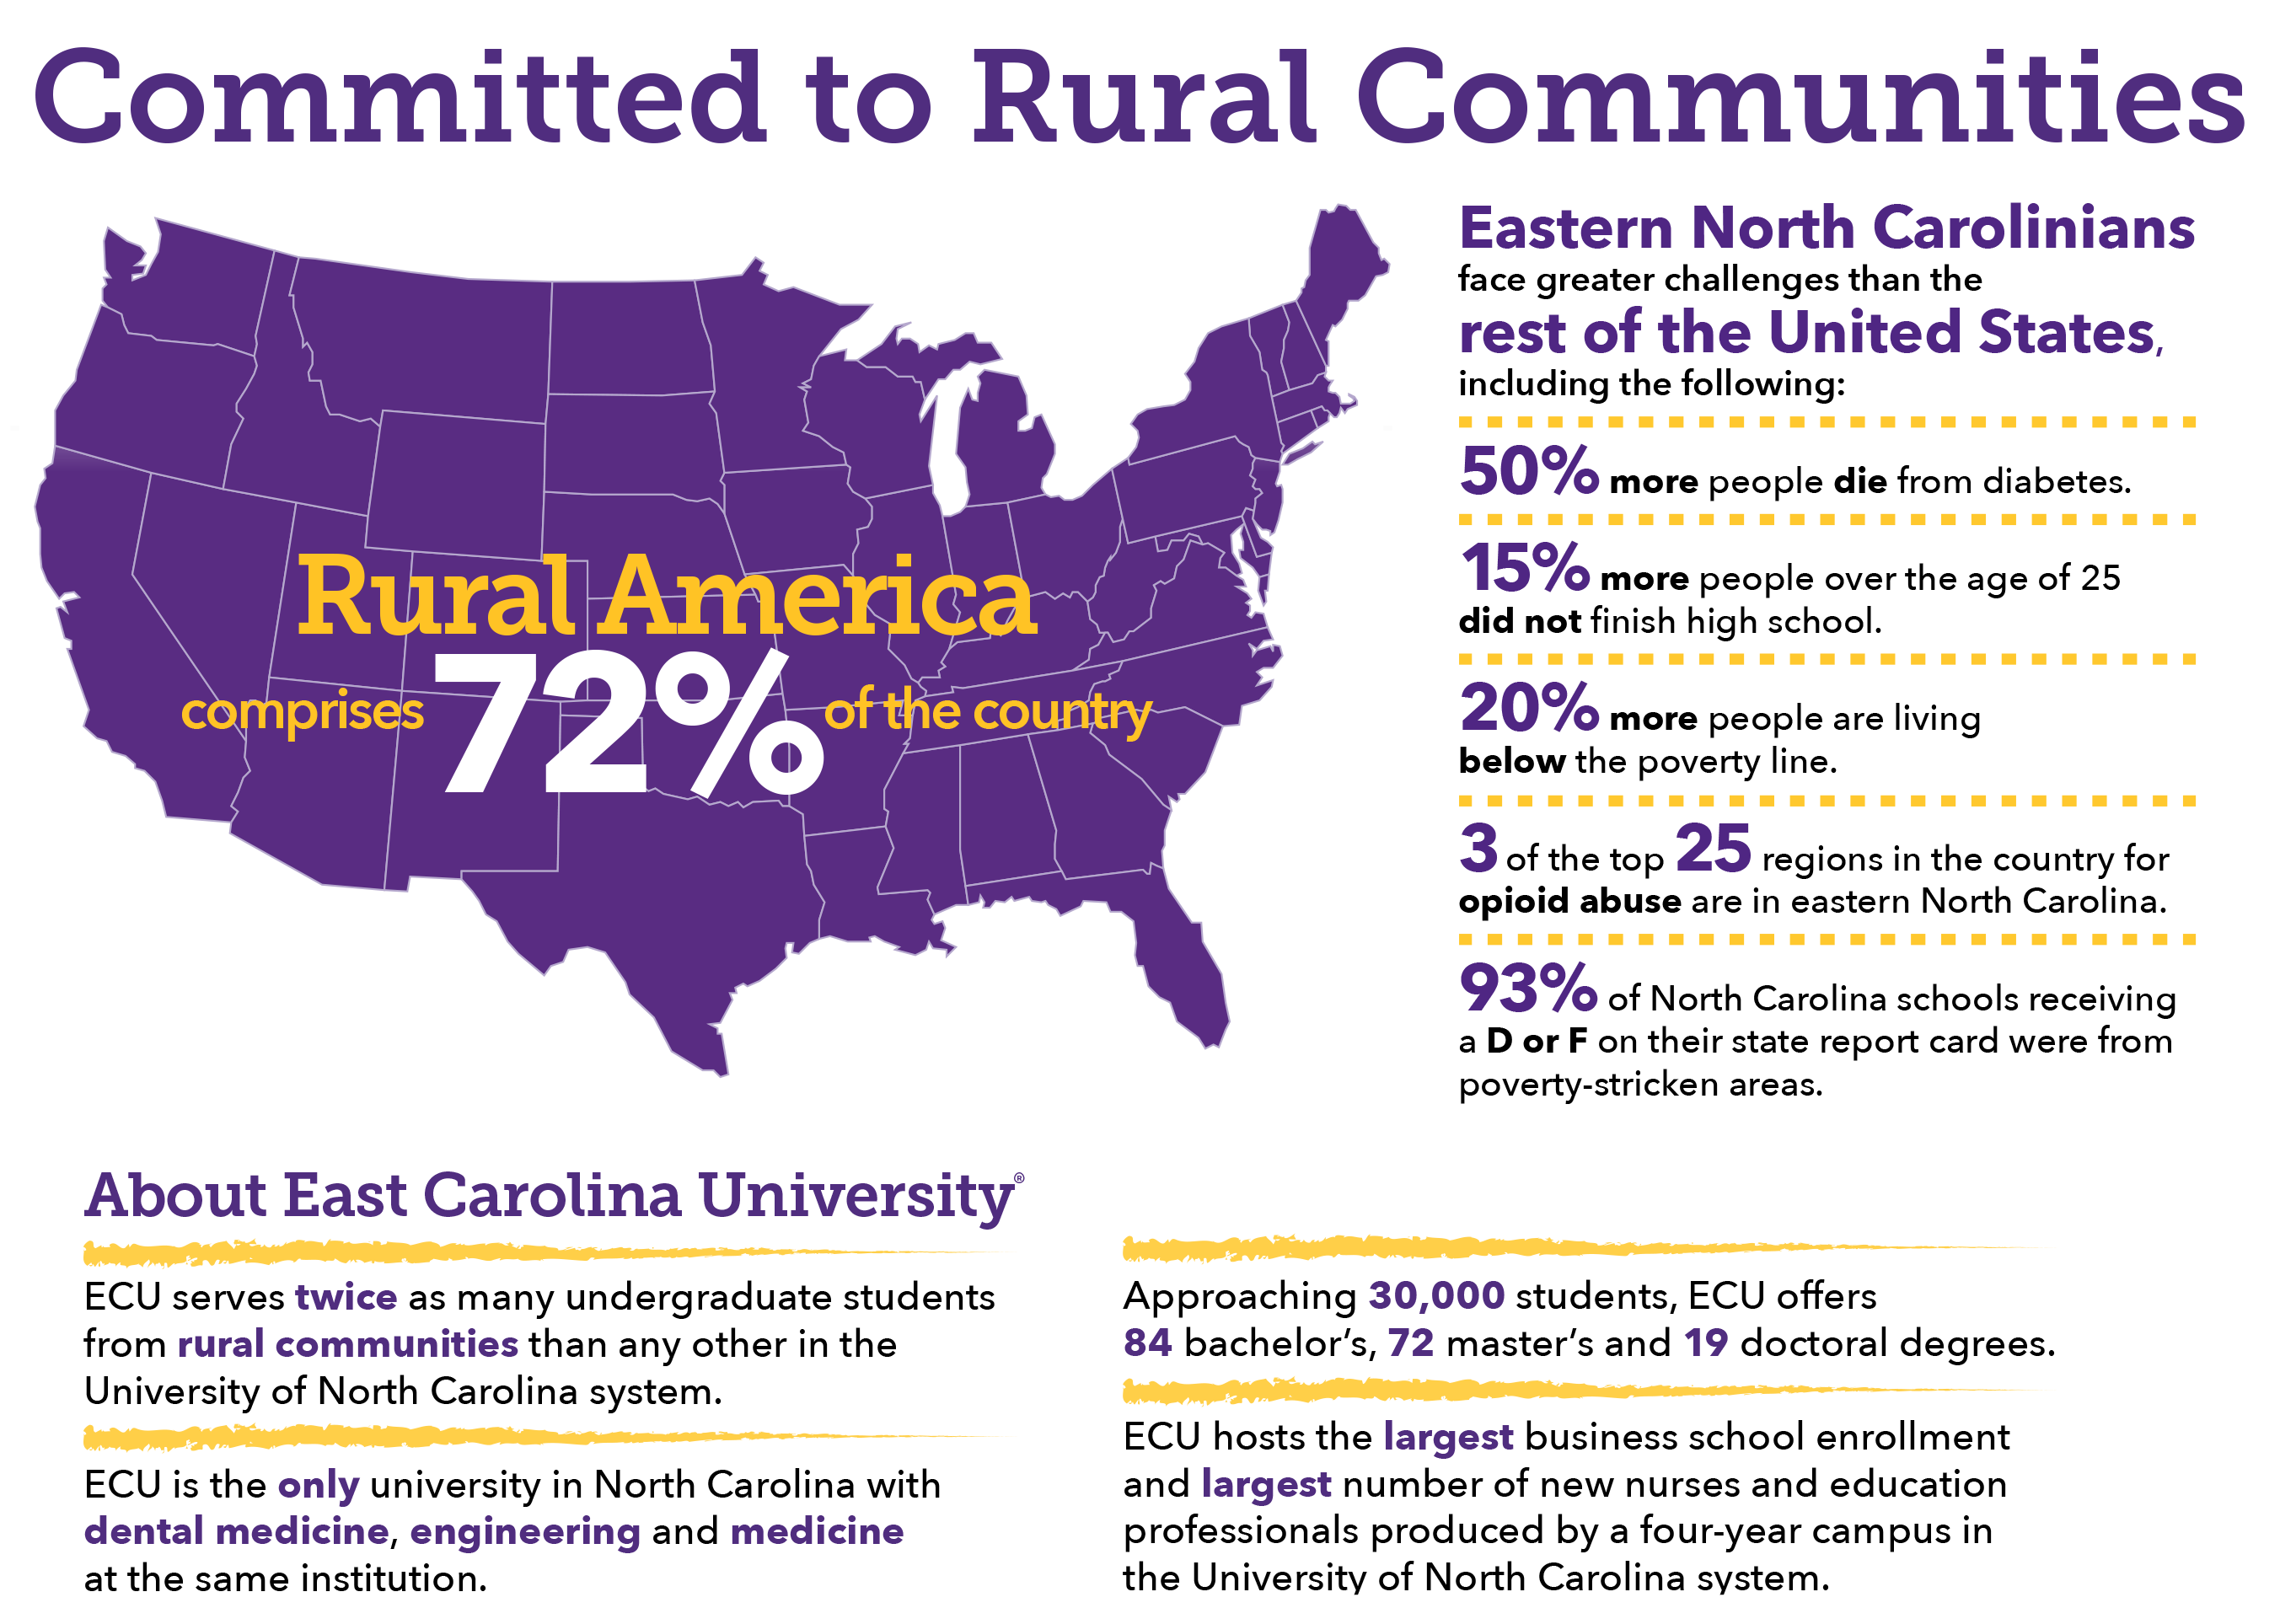 Graphic describing statistics of rural america